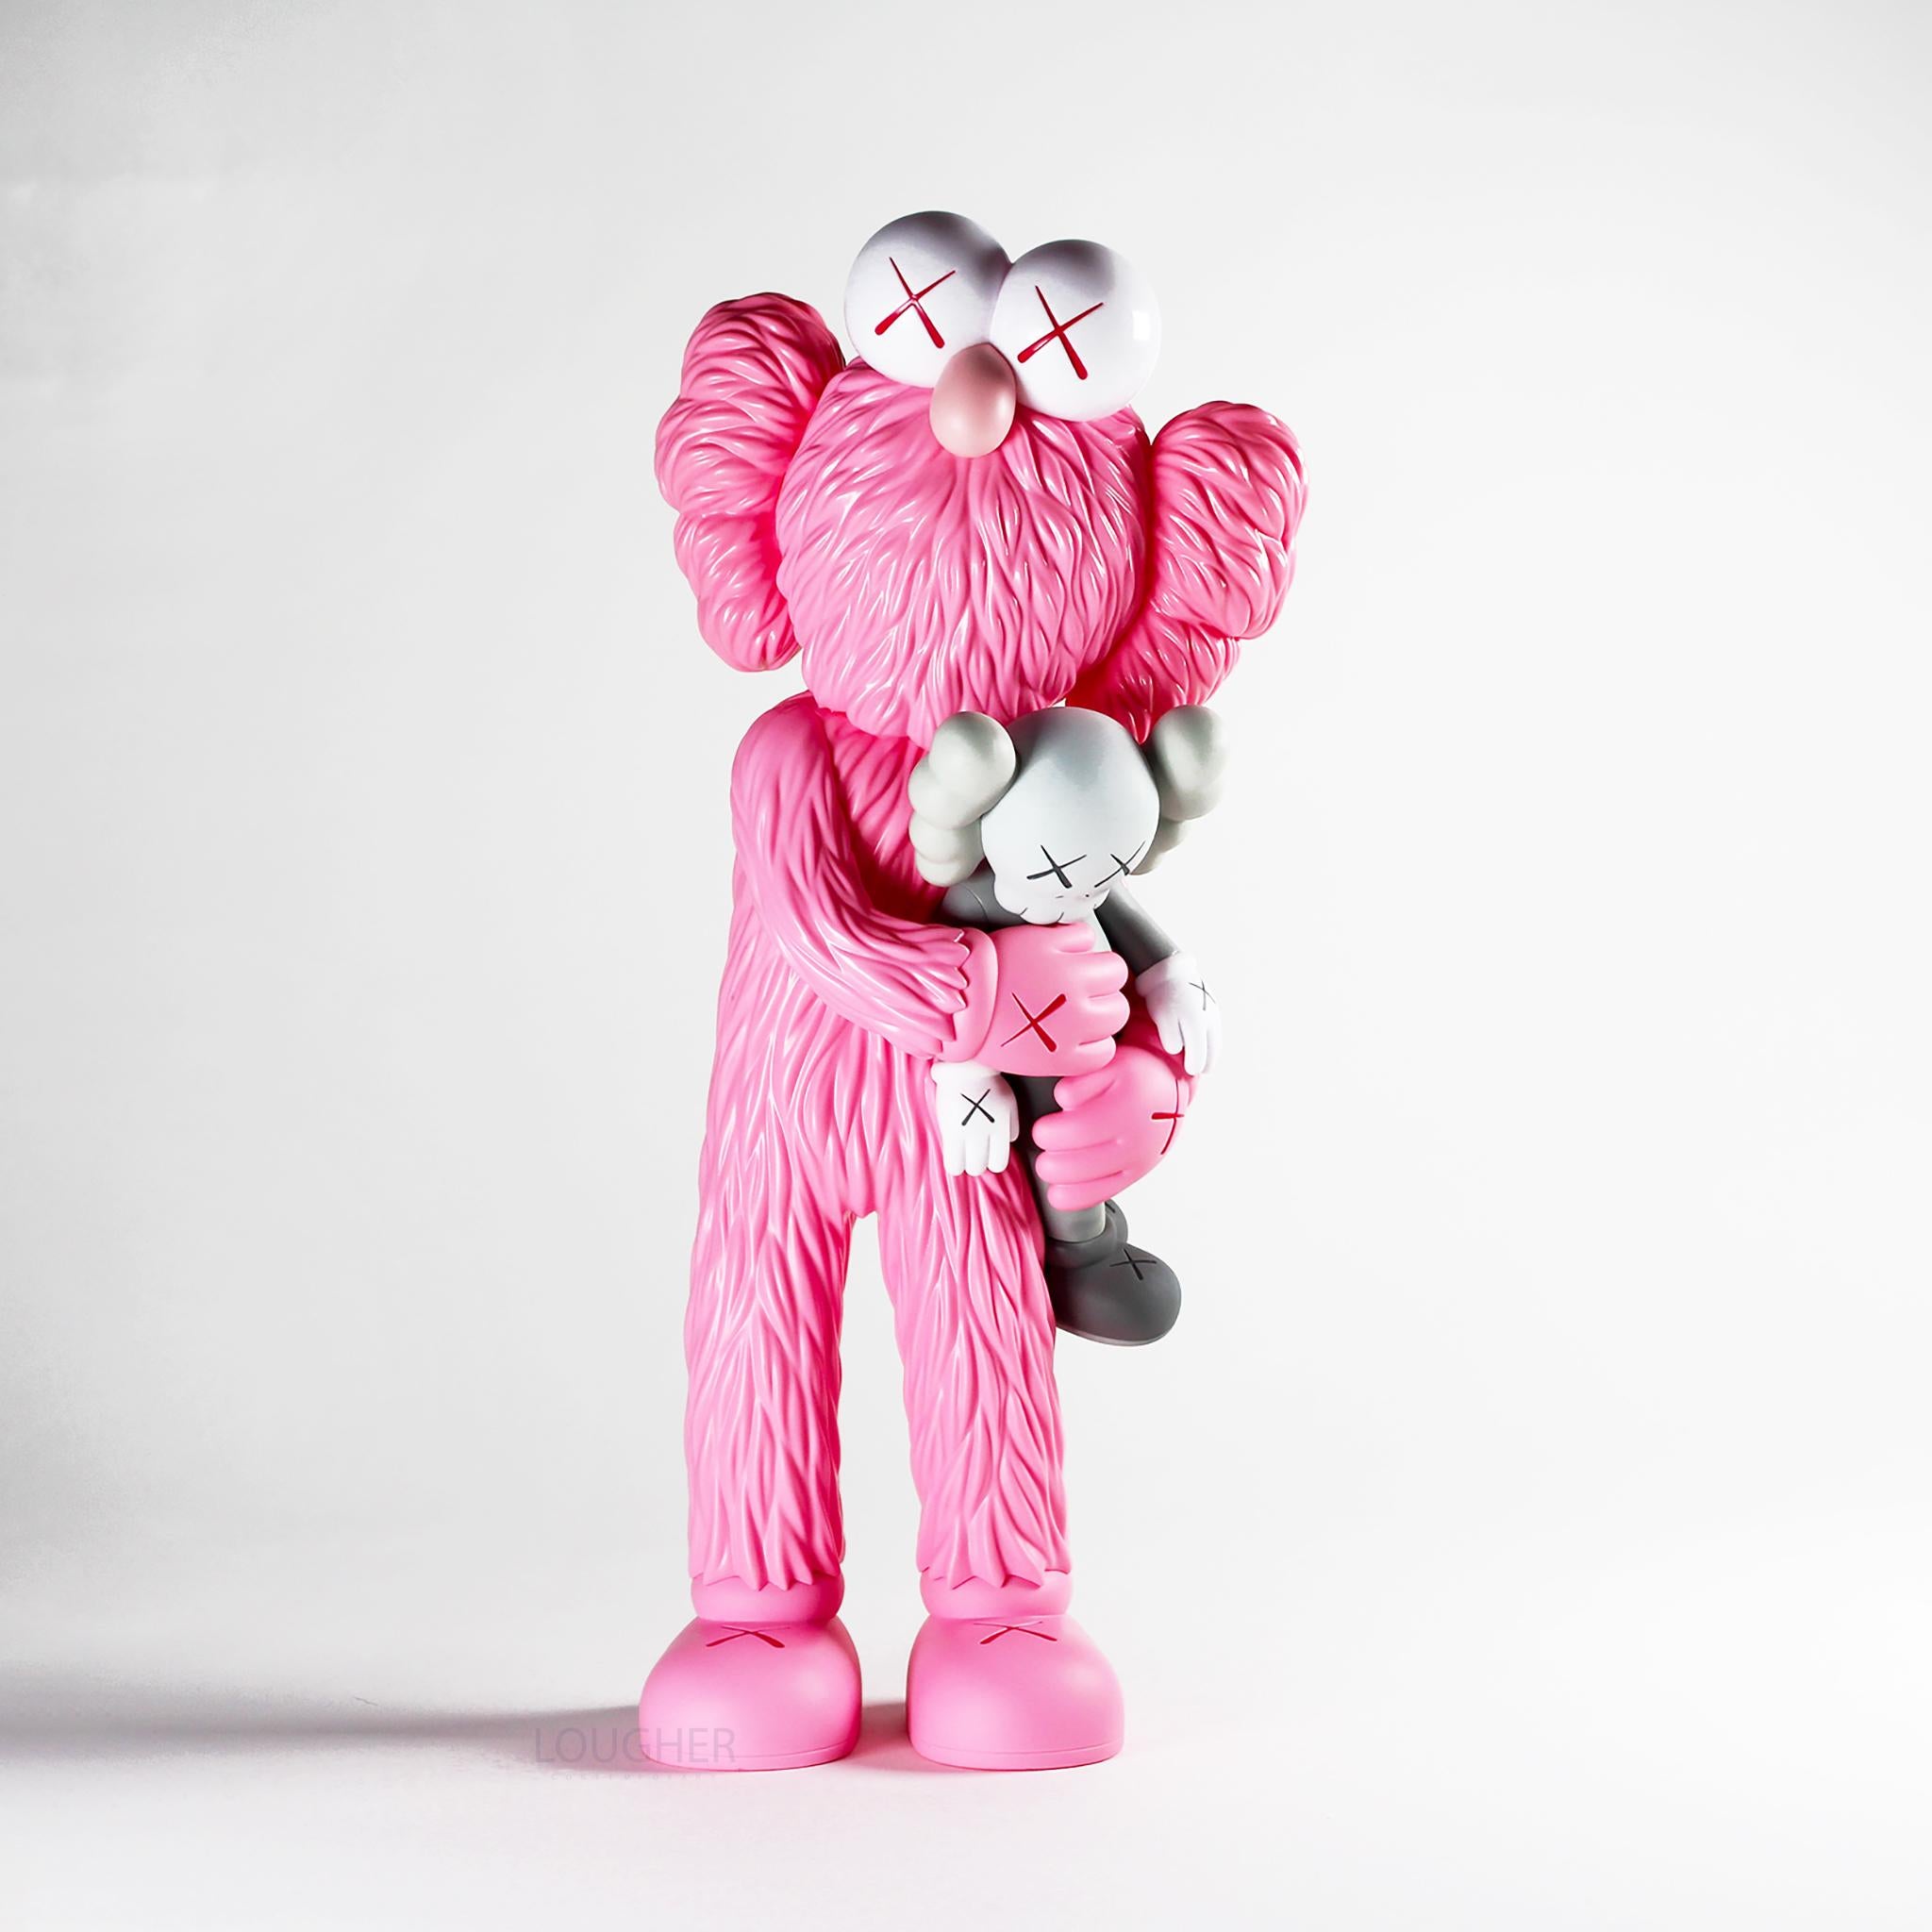 KAWS Figurative Sculpture - Take (Pink)